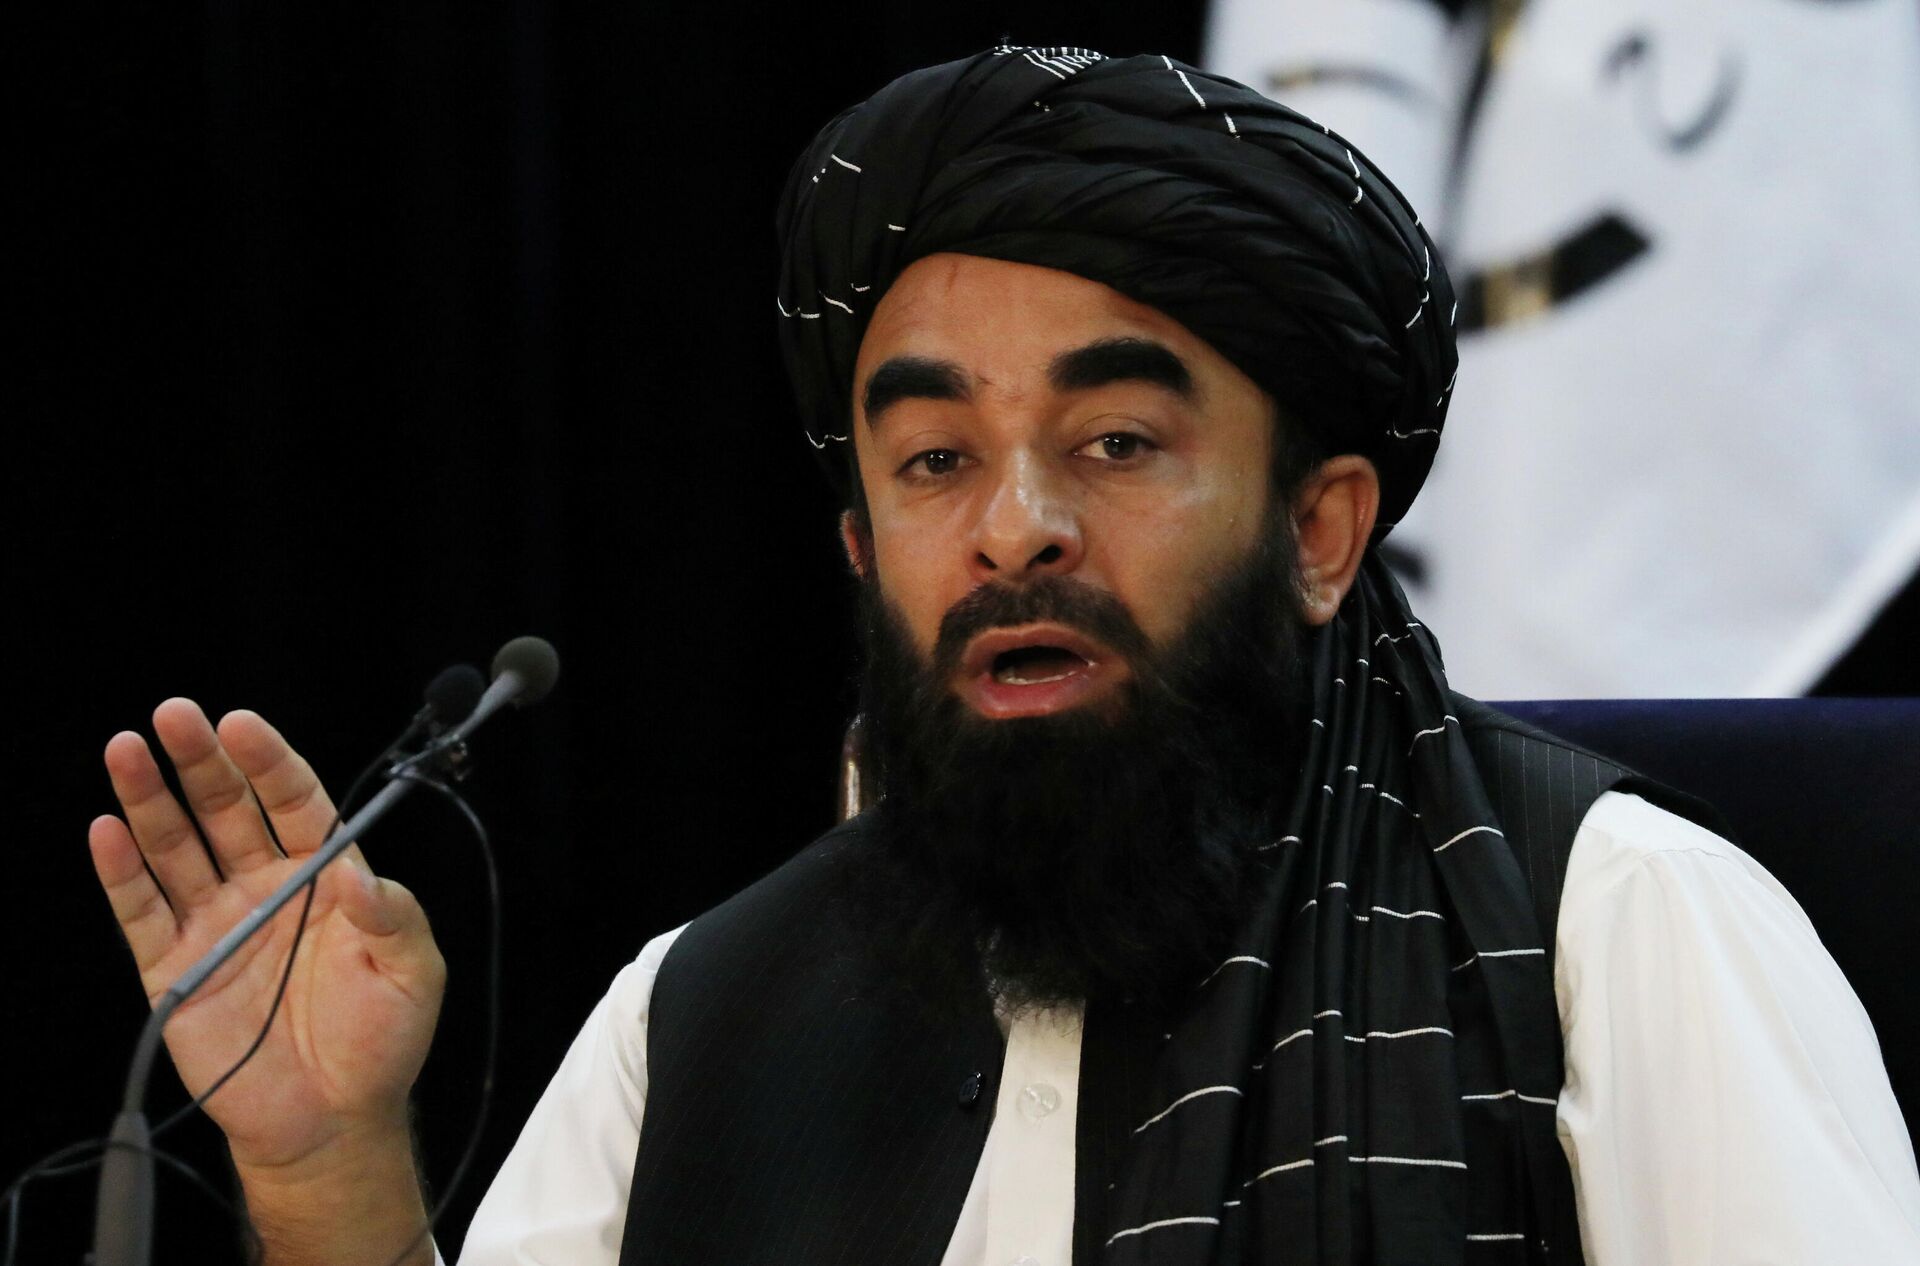 Taliban spokesman Zabihullah Mujahid speaks during a news conference in Kabul, Afghanistan September 6, 2021 - Sputnik International, 1920, 03.10.2021